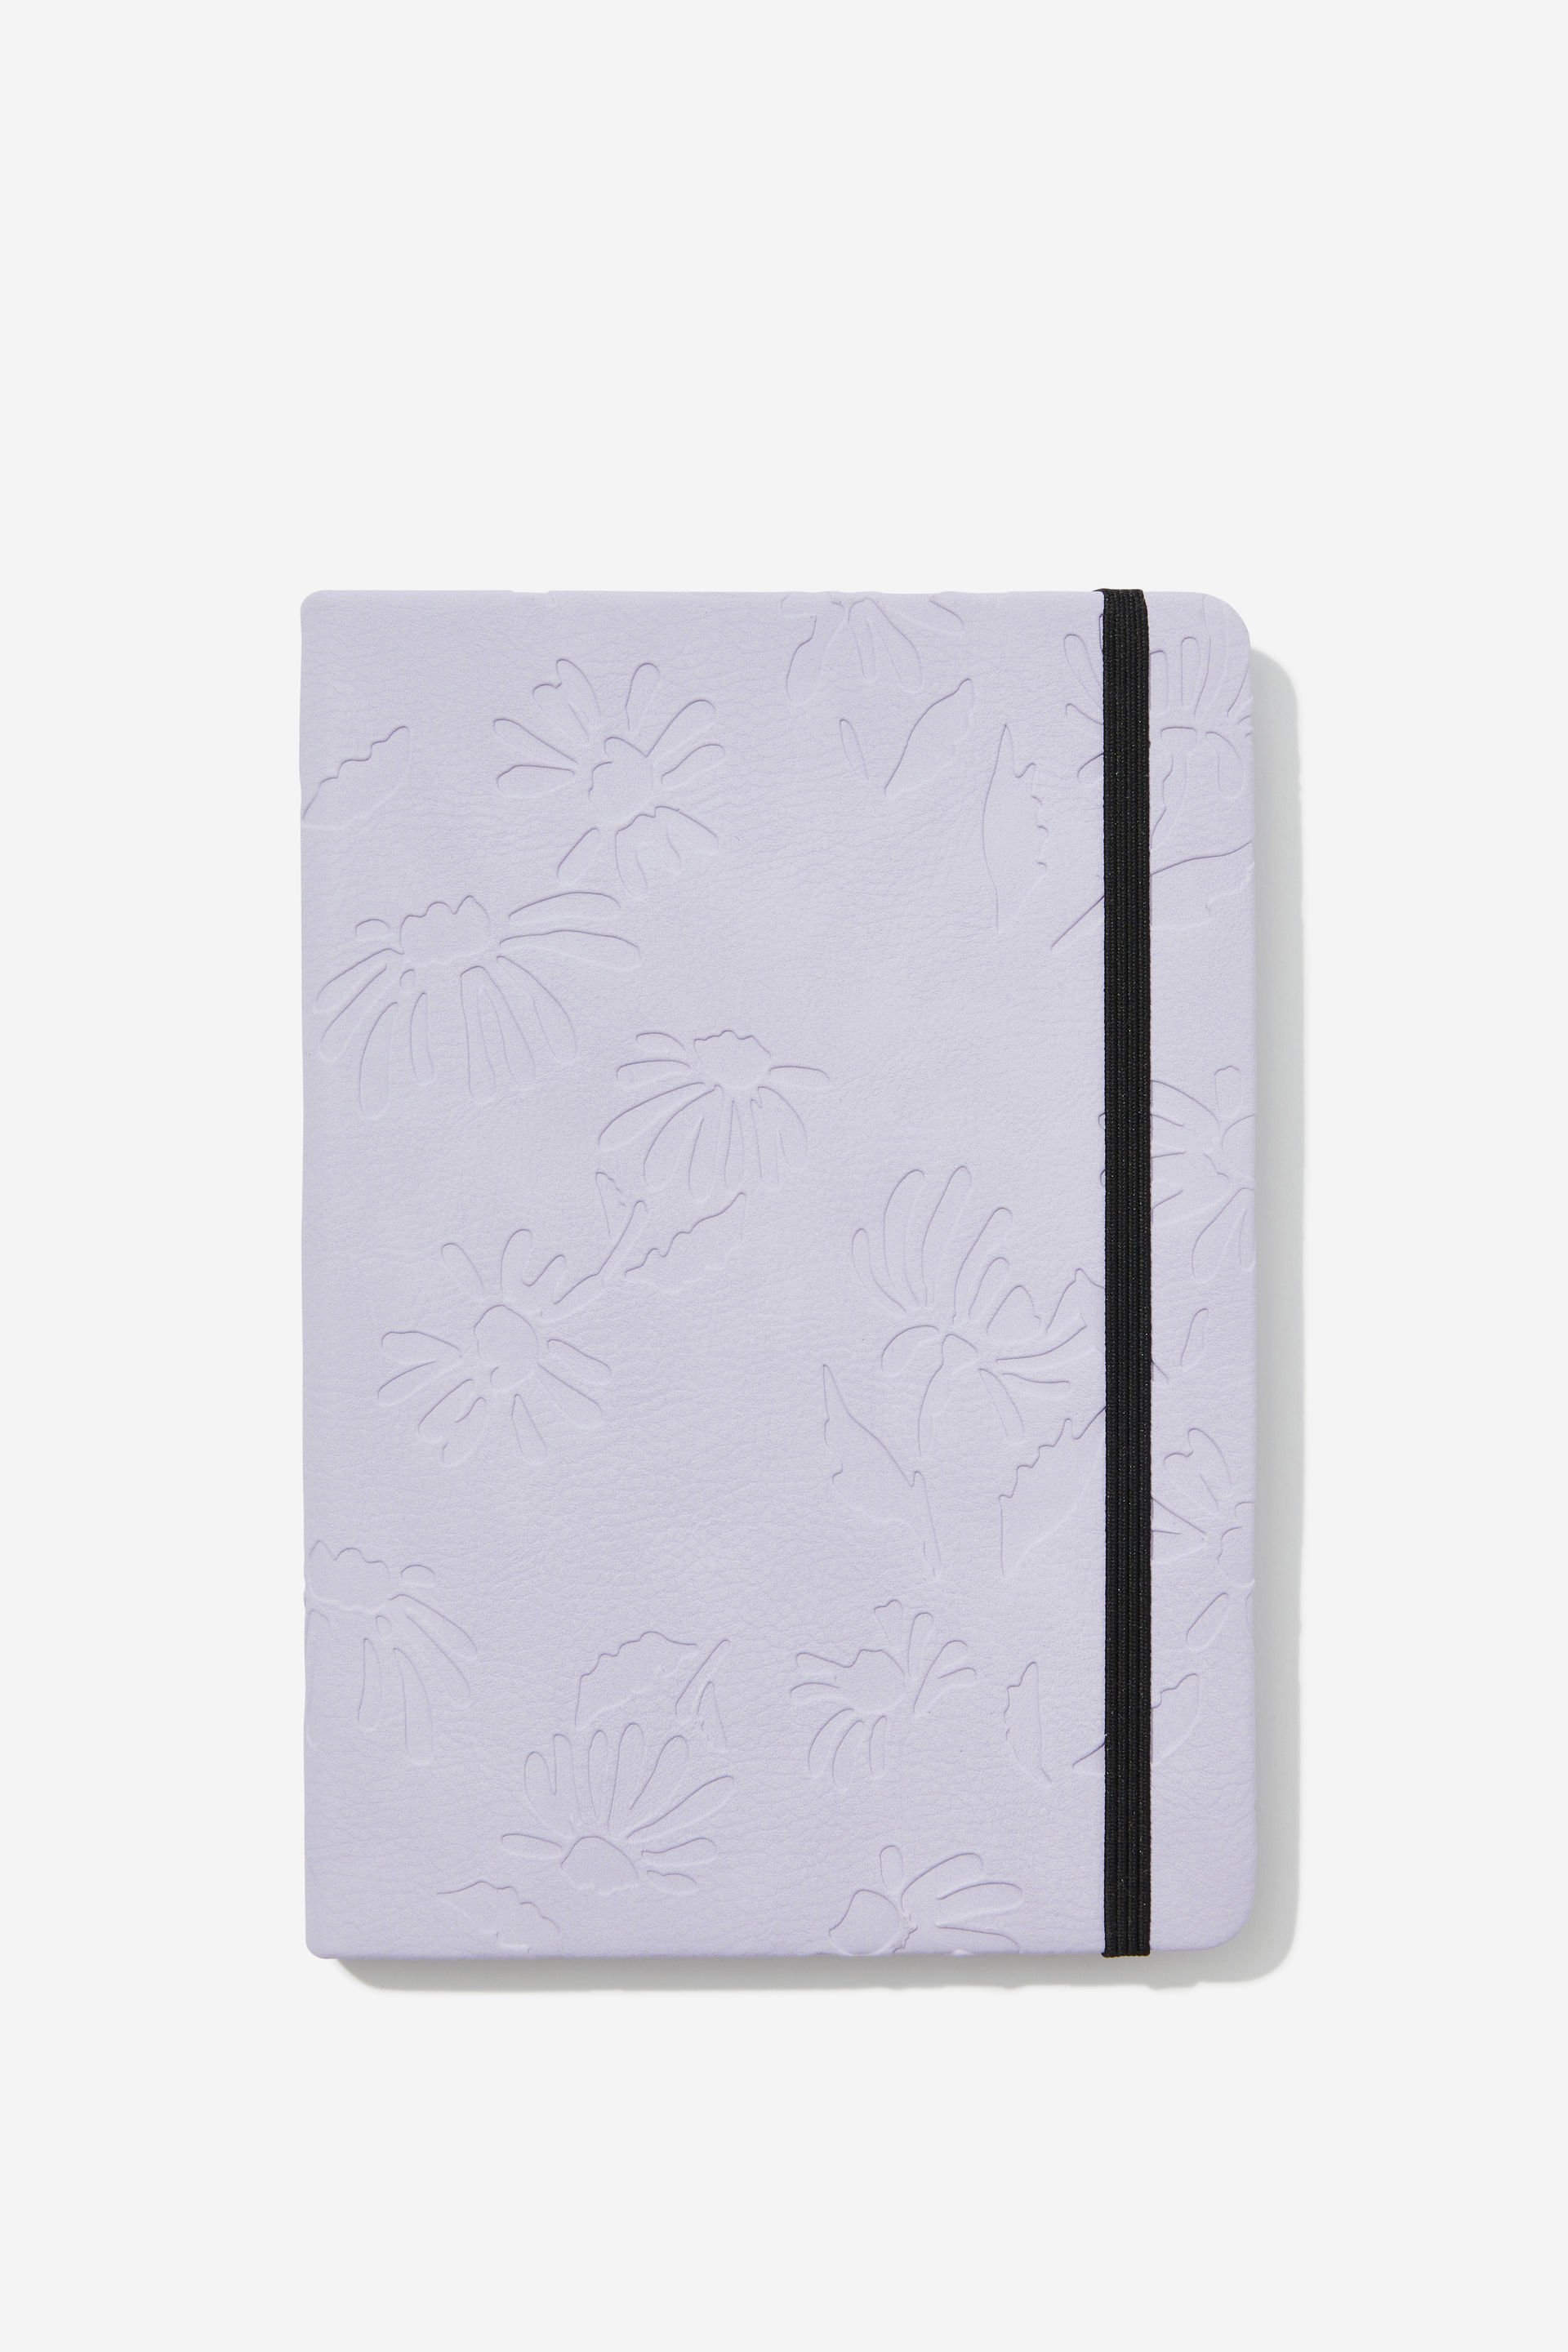 Typo - A5 Premium Buffalo Journal - Daisy soft lilac debossed